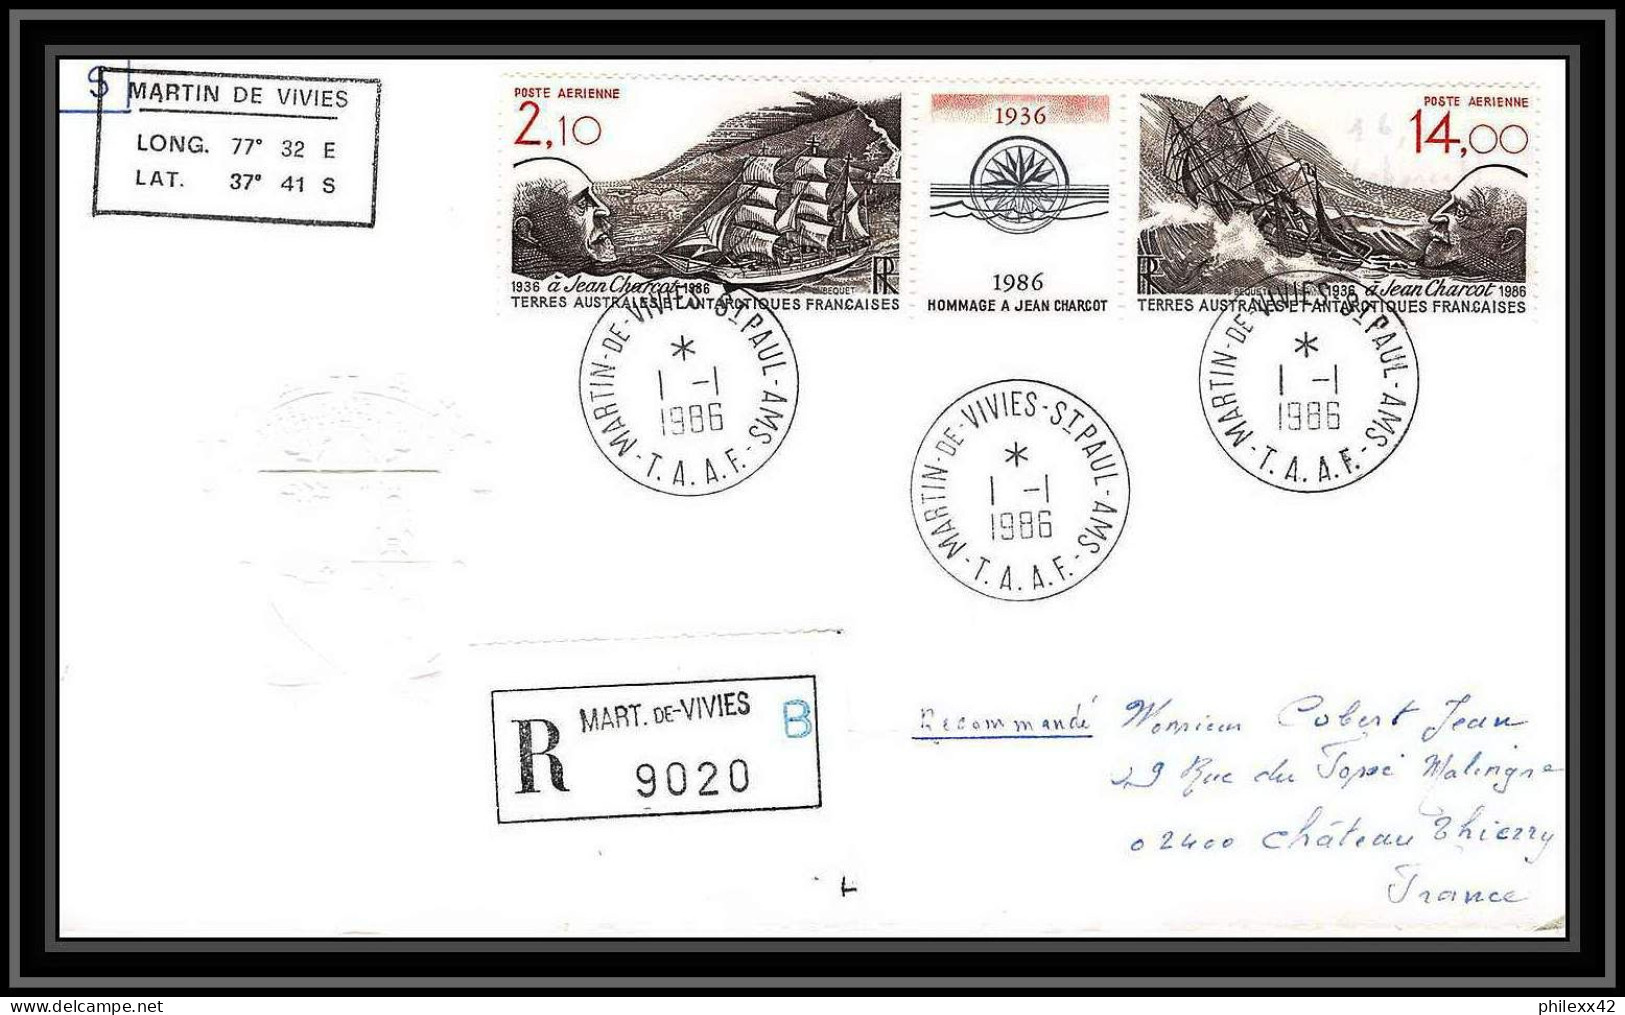 0264 Taaf Terres Australes Antarctic Lettre (cover) 01/01/1986 PA N° 94A BATEAU A VOILE CHARCOT Recommandé - Covers & Documents